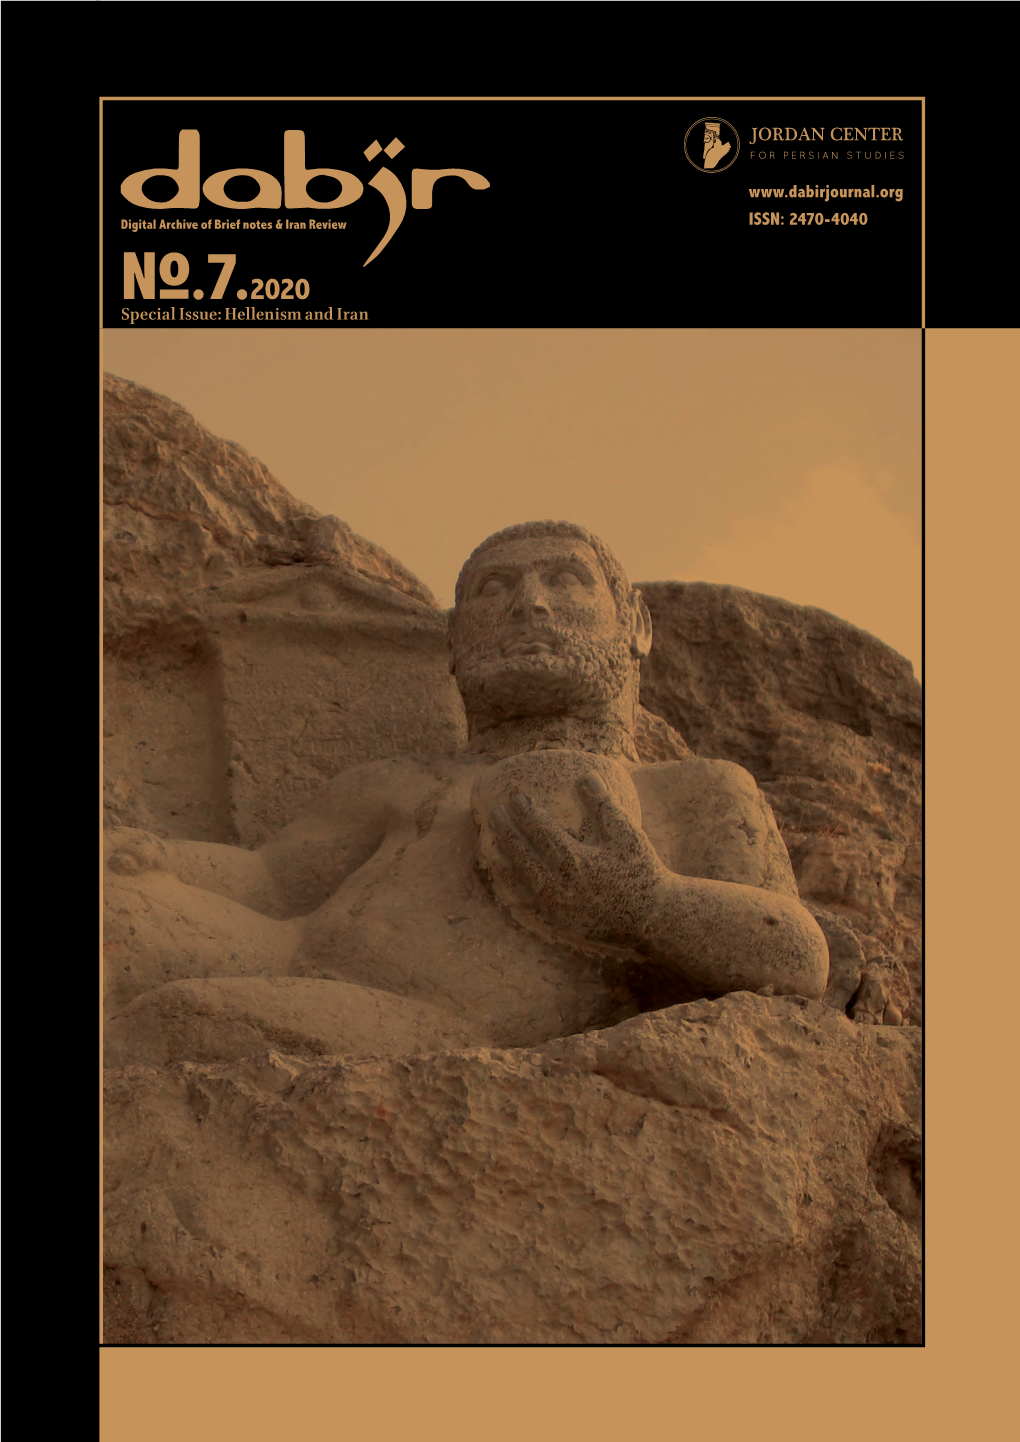 Sassanid Toreutics Discovered in Shemakha